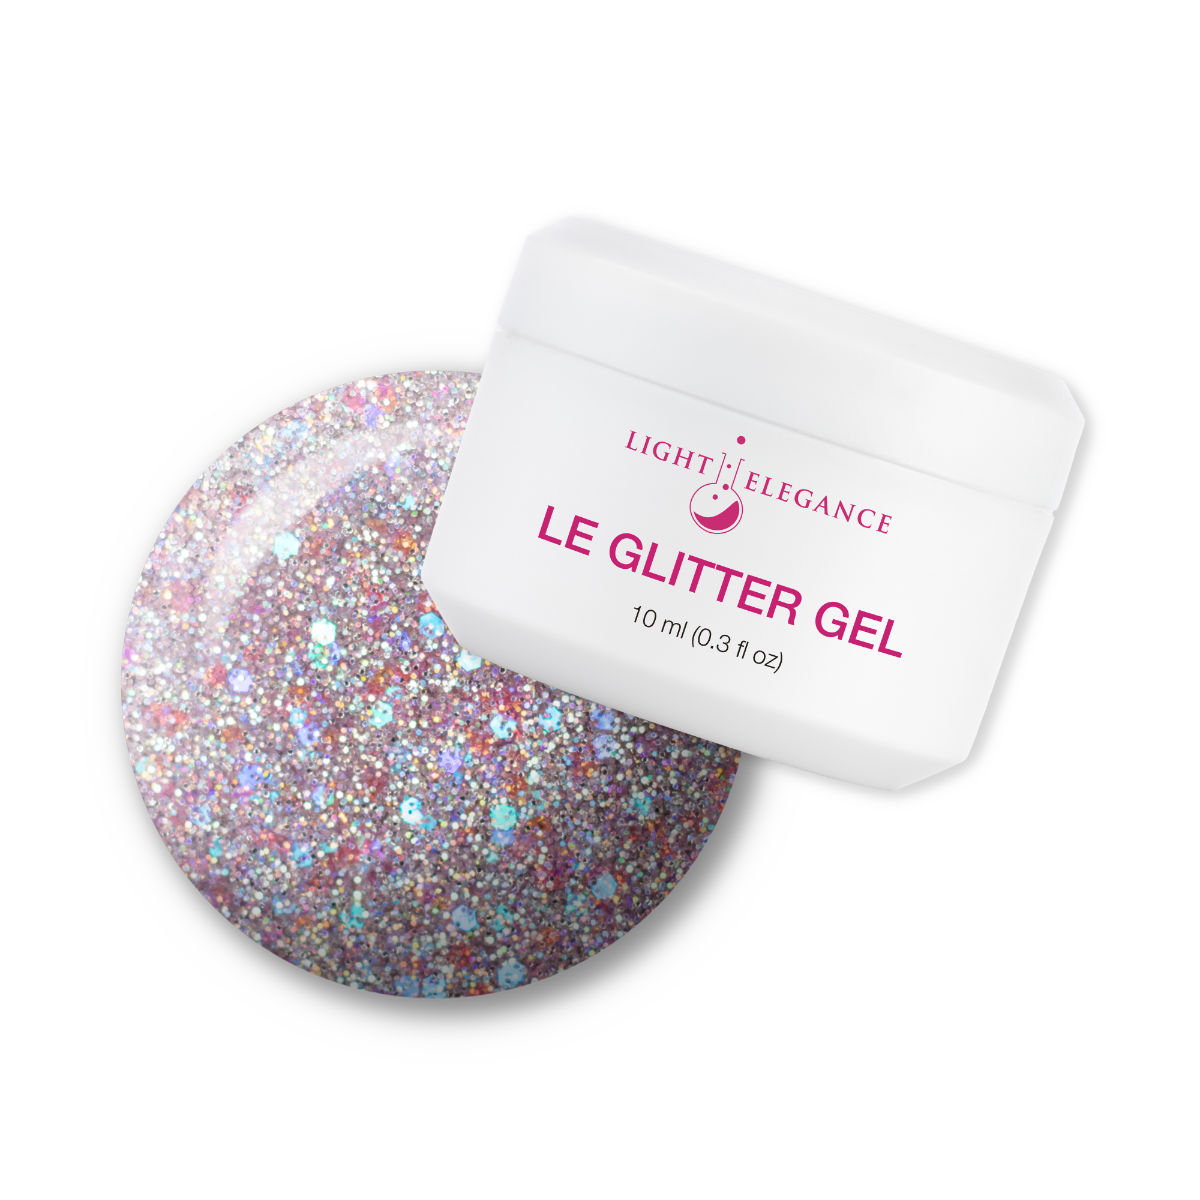 Light Elegance Glitter Gel - Sugar Coated :: New Packaging